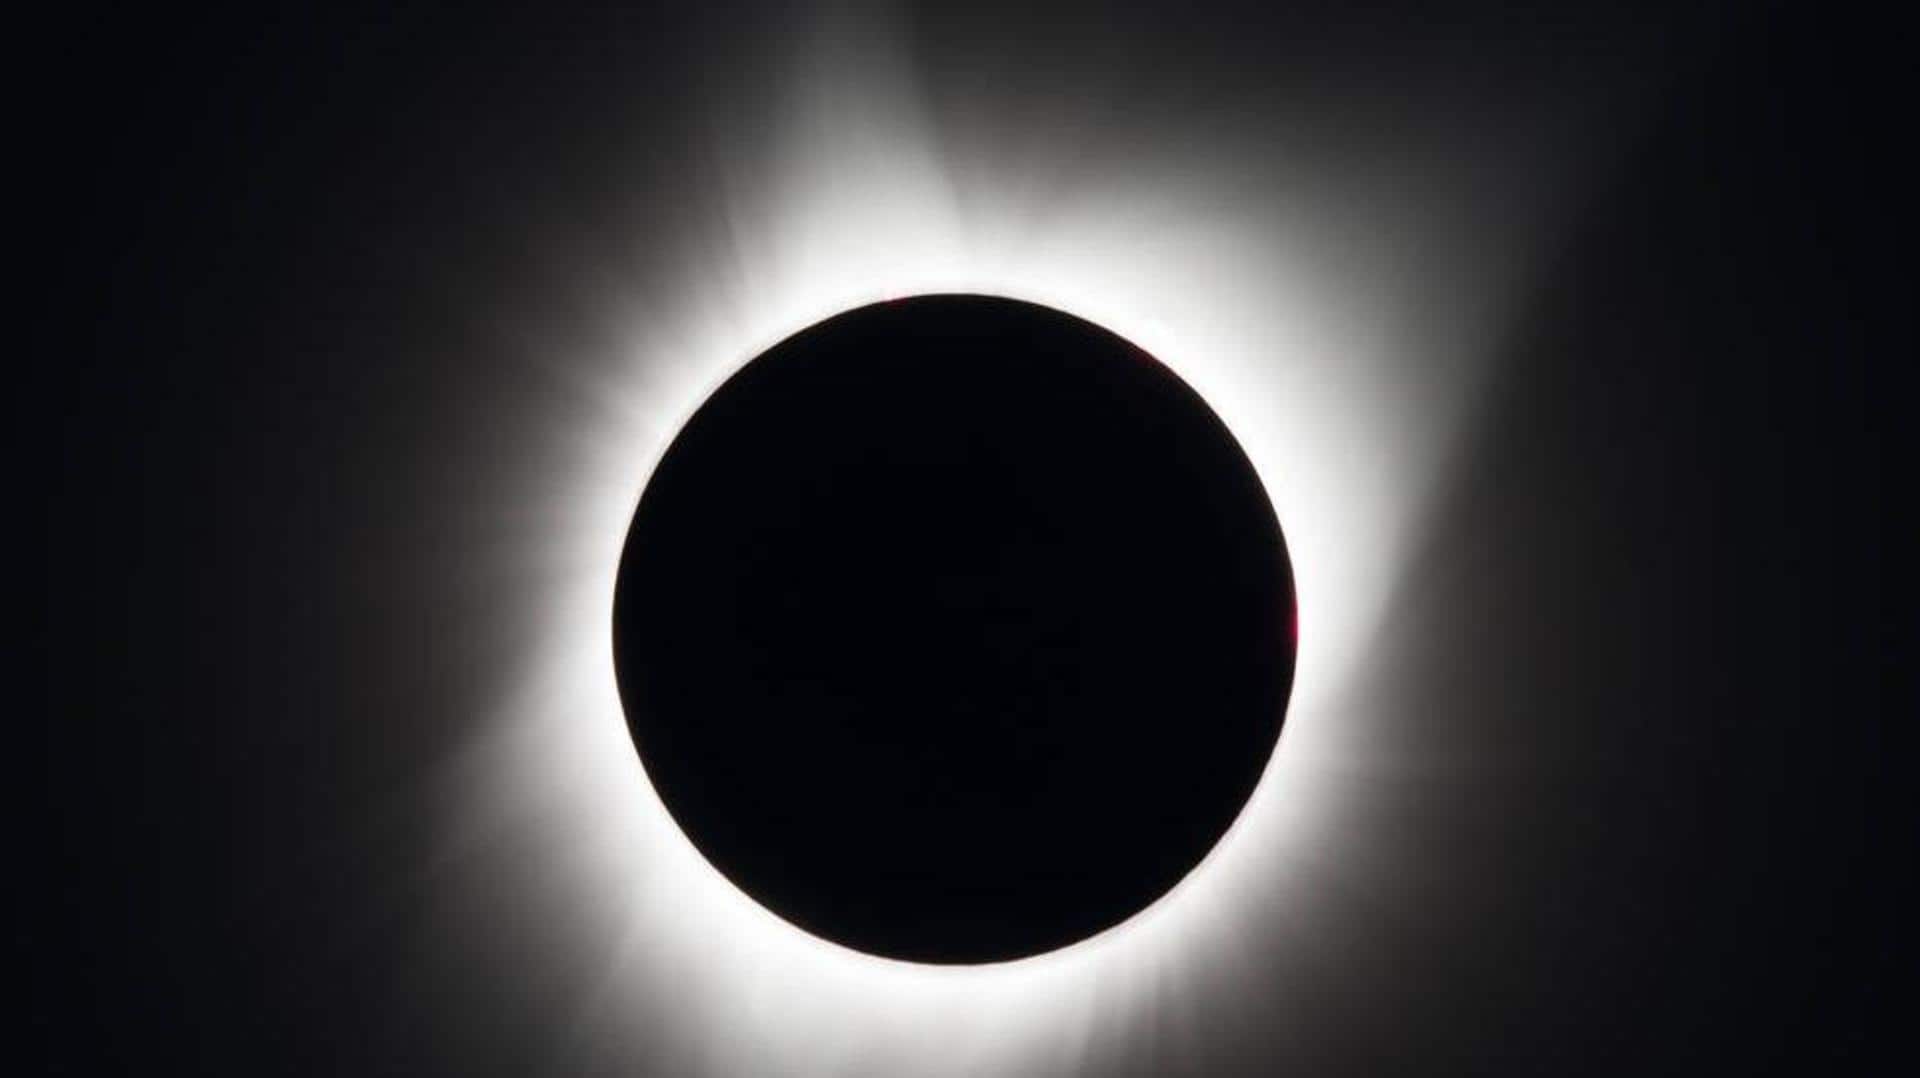 Rare hybrid solar eclipse will occur on April 20